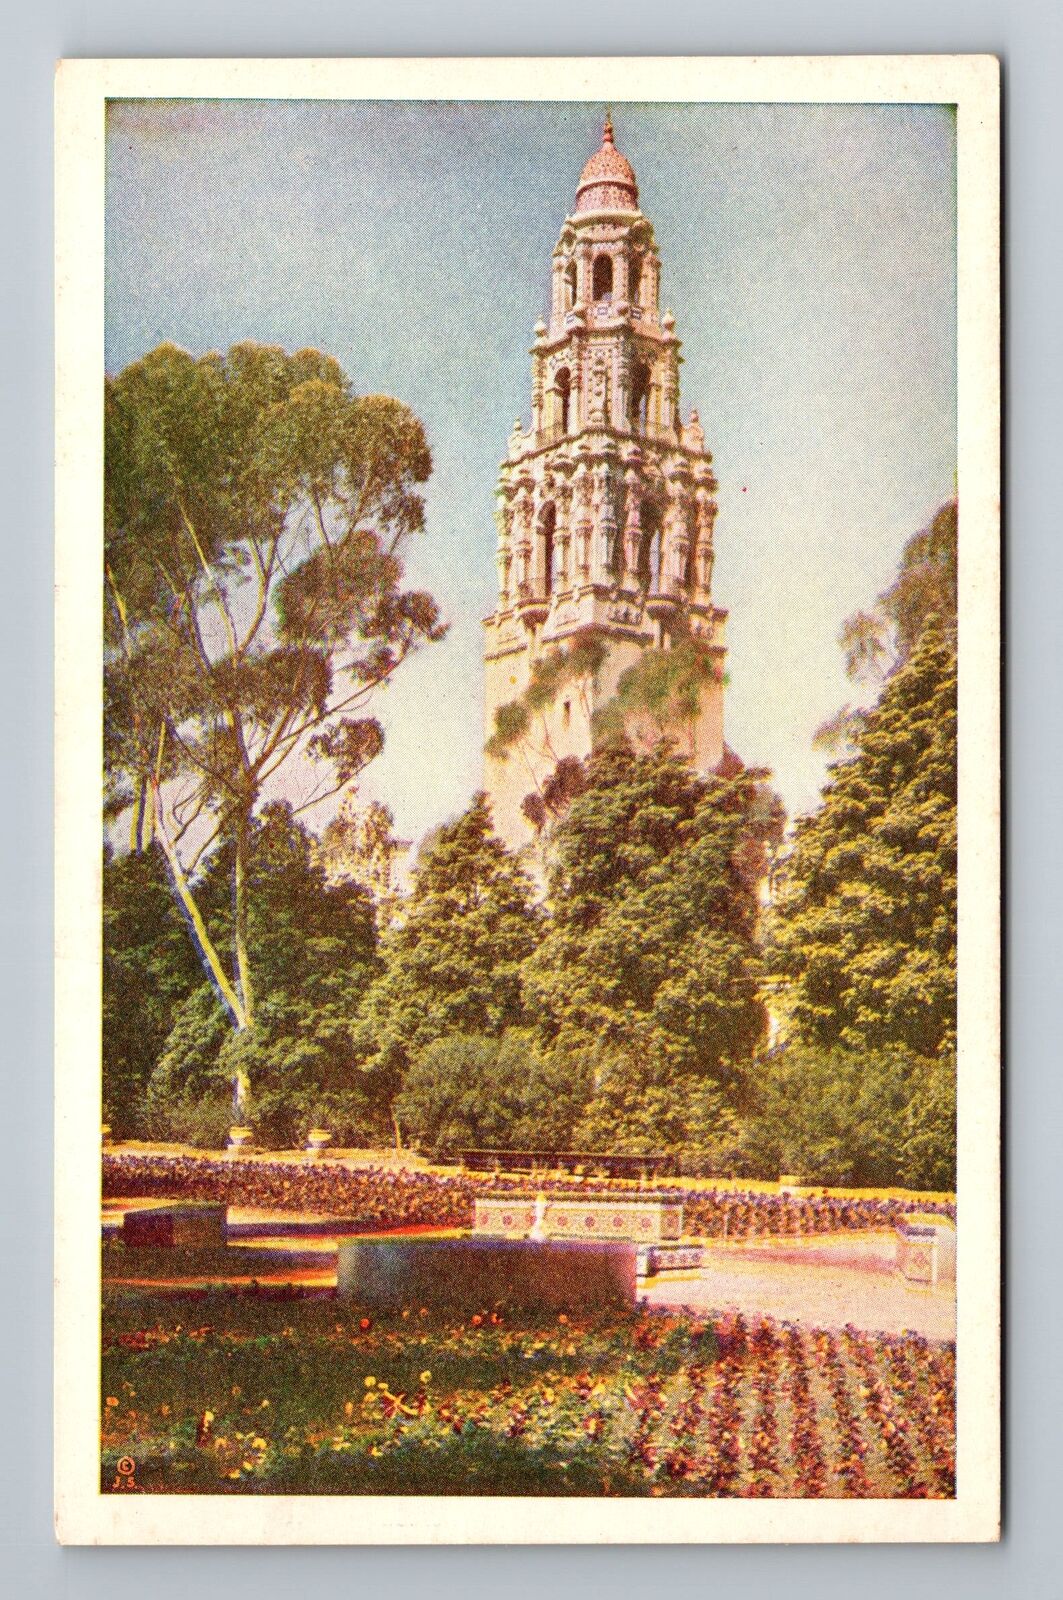 CA-California, California Tower, Alcazar Gardens, Scenic View, Vintage Postcard